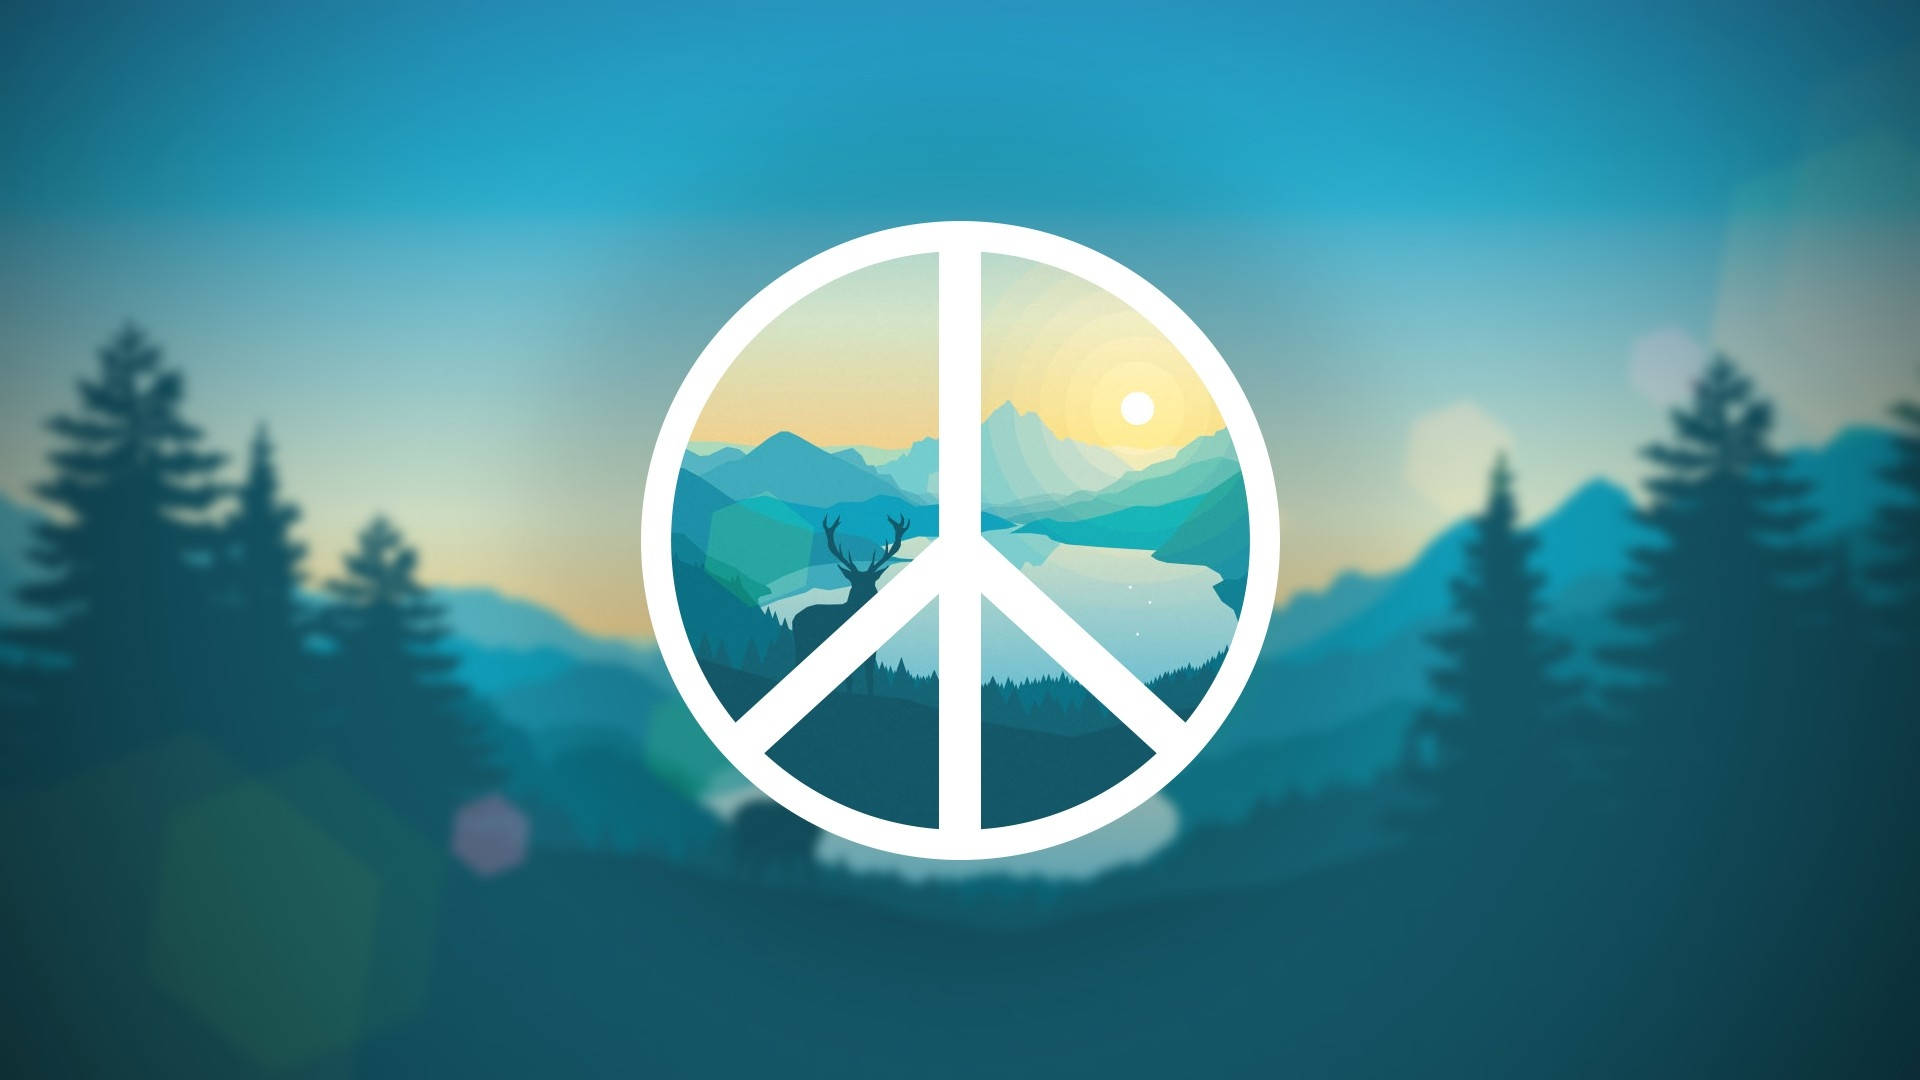 Peace Mountains Digital Art Background